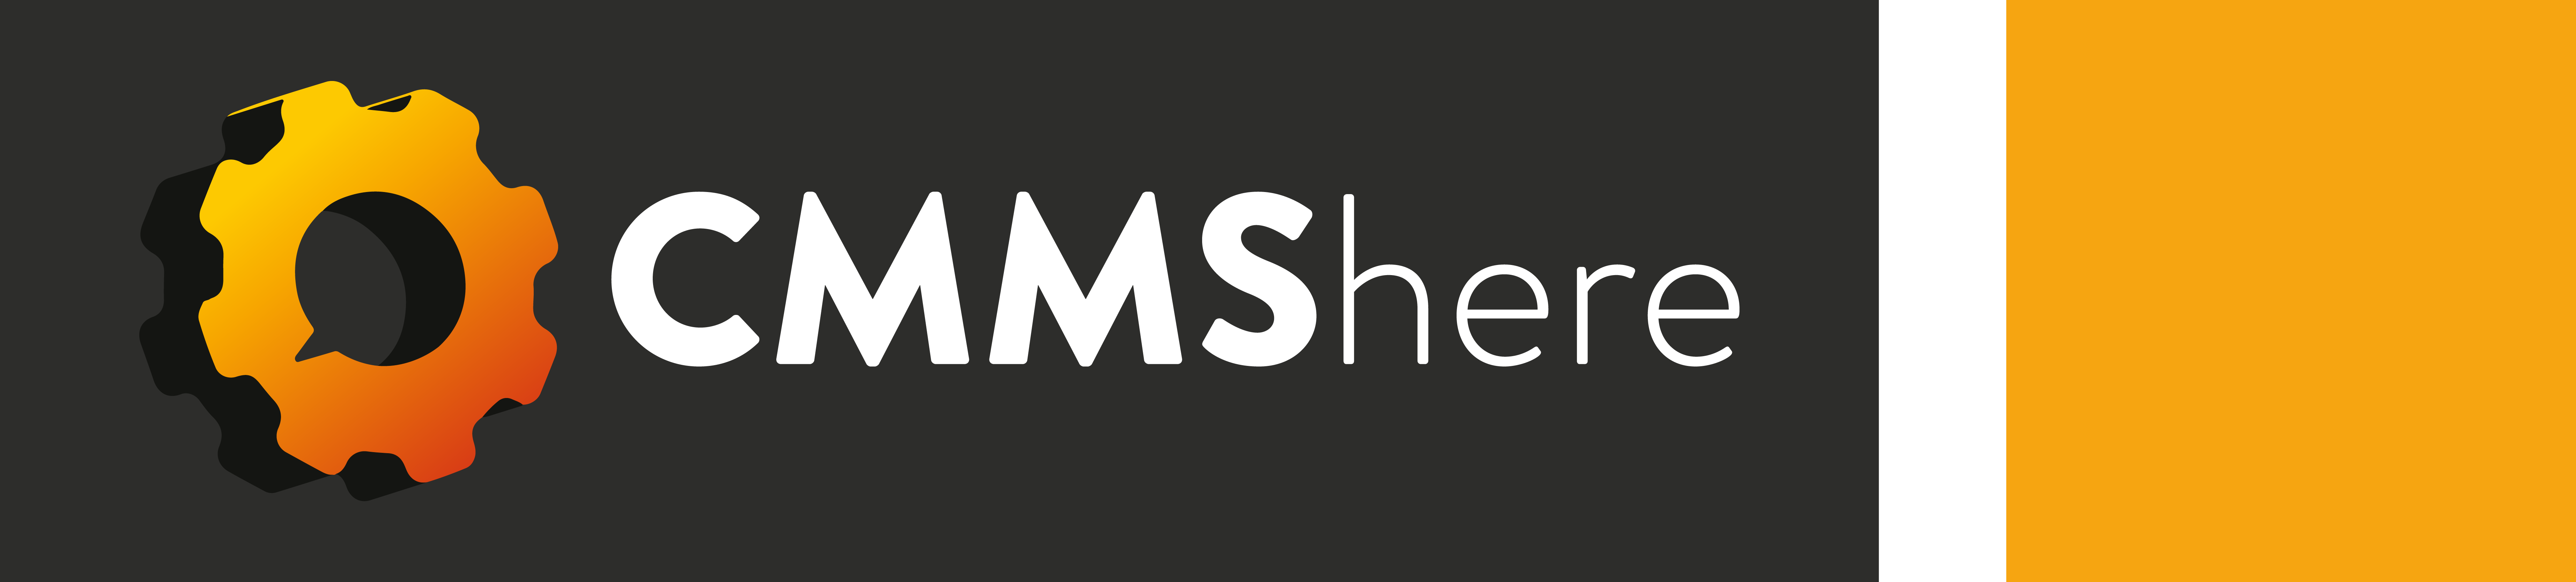 CMMS - Software de mantenimiento | CMMSHere